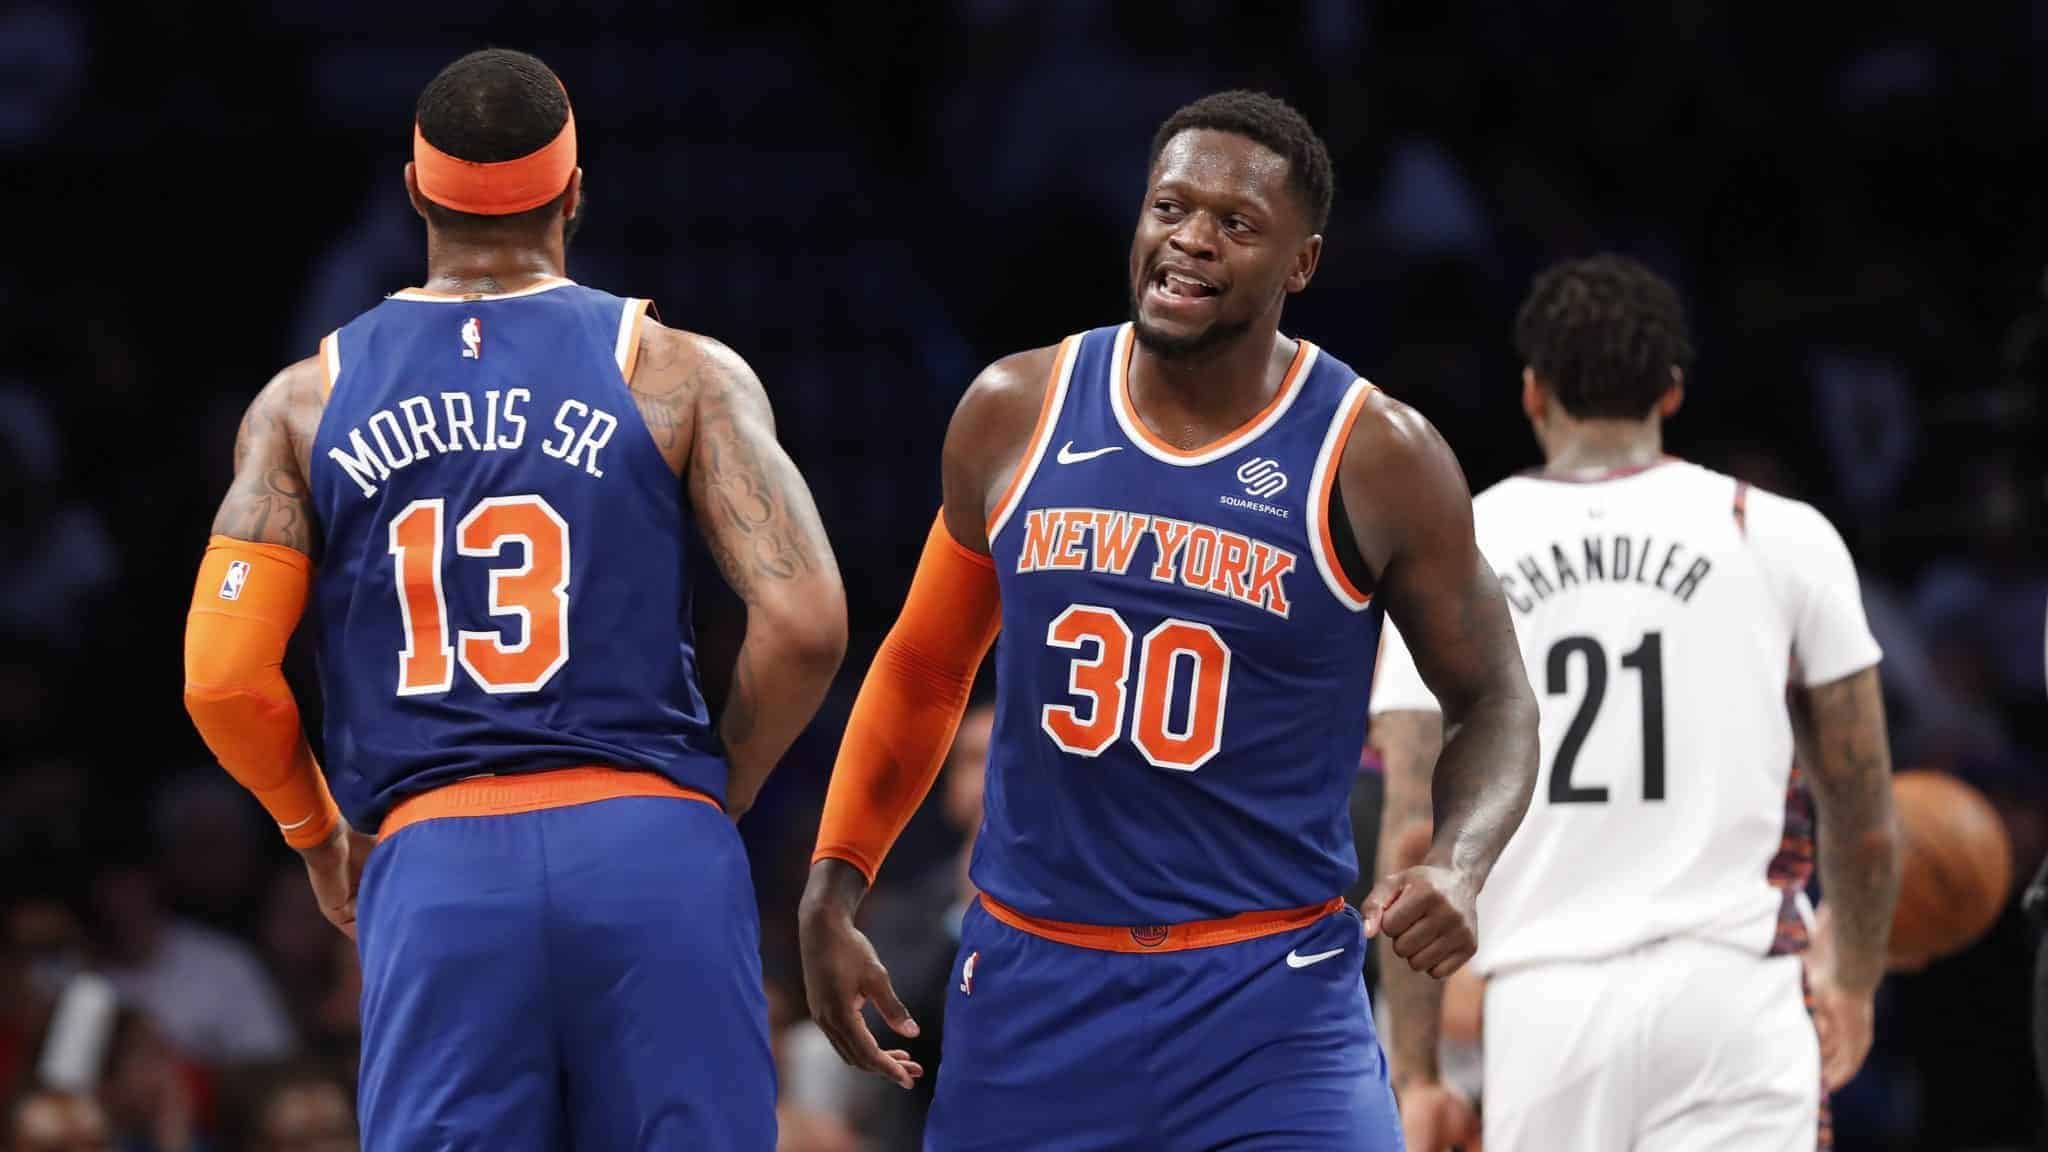 New York Knicks forward Julius Randle (30) looks around Knicks forward Marcus Morris Sr. (13) as Brooklyn Nets forward Wilson Chandler (21) walks away during the second half of an NBA basketball game, Thursday, Dec. 26, 2019, in New York.